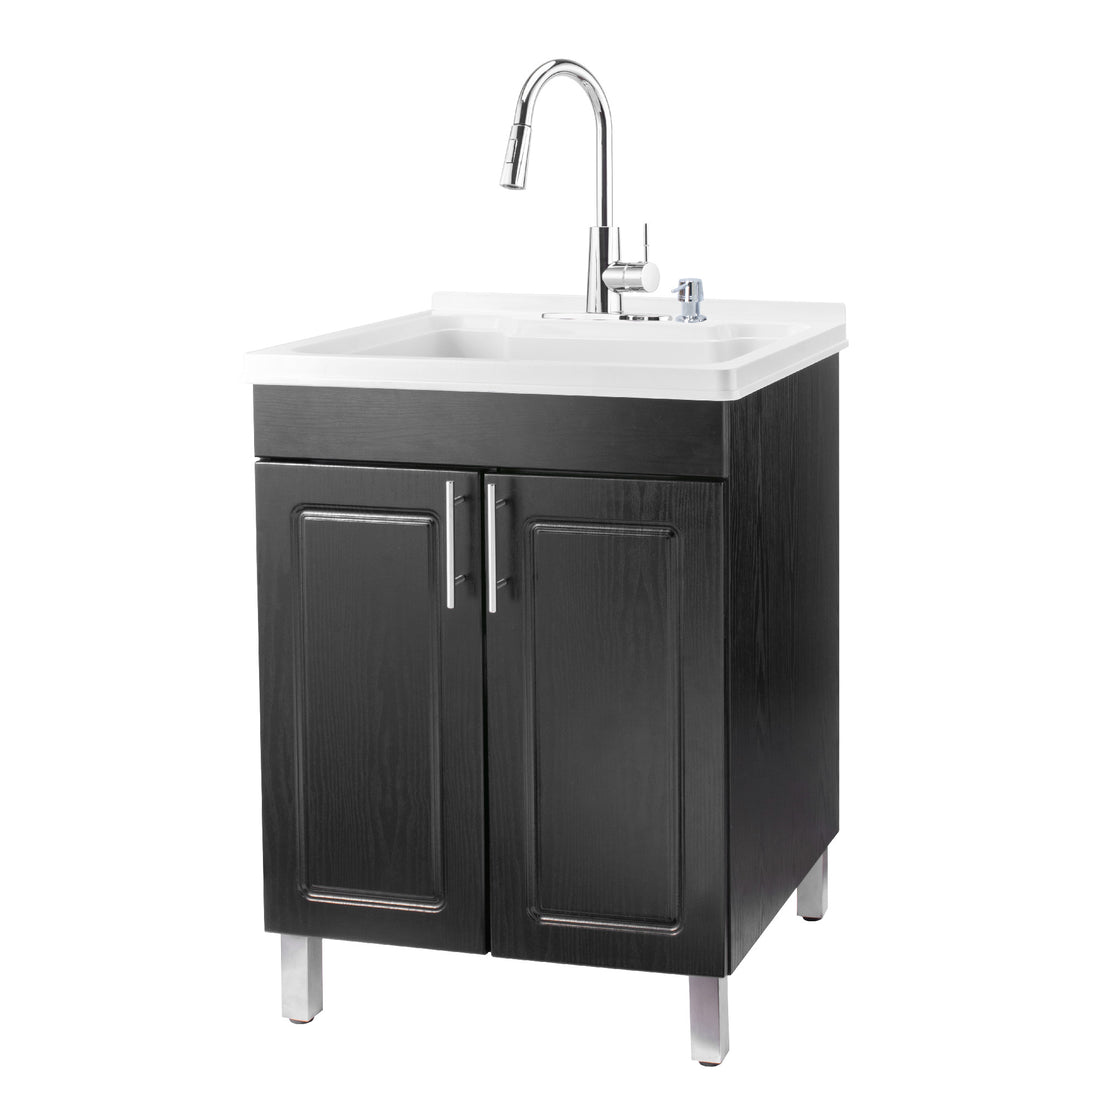 Tehila Black Vanity Cabinet and White Utility Sink with Chrome Finish High-Arc Pull-Down Faucet - Utility sinks vanites Tehila